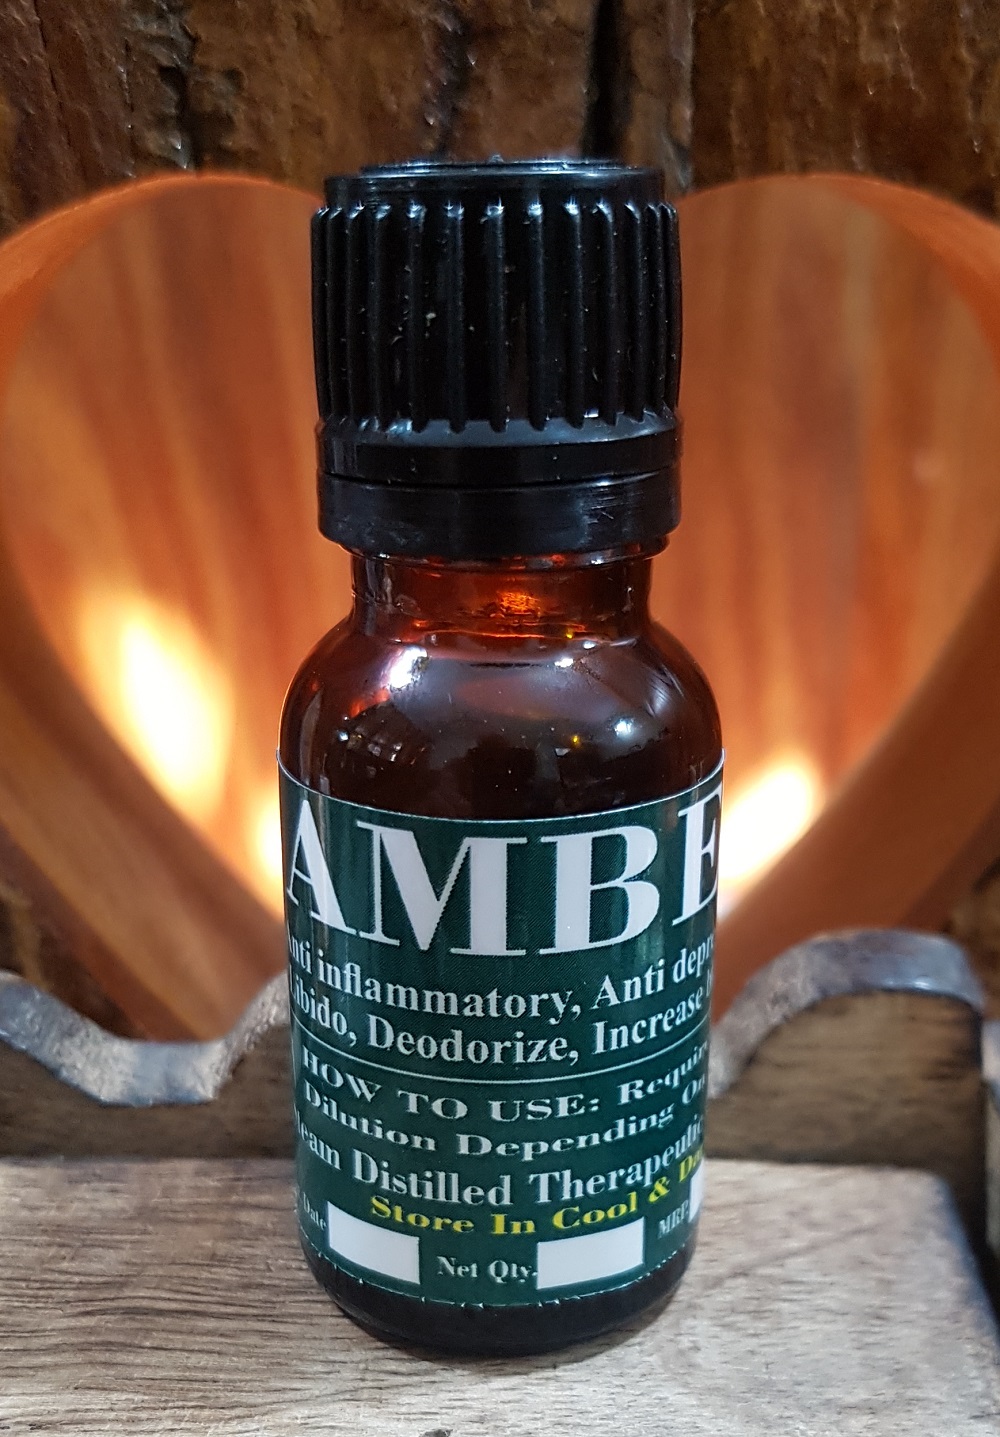 Amber Oil Essential Oil